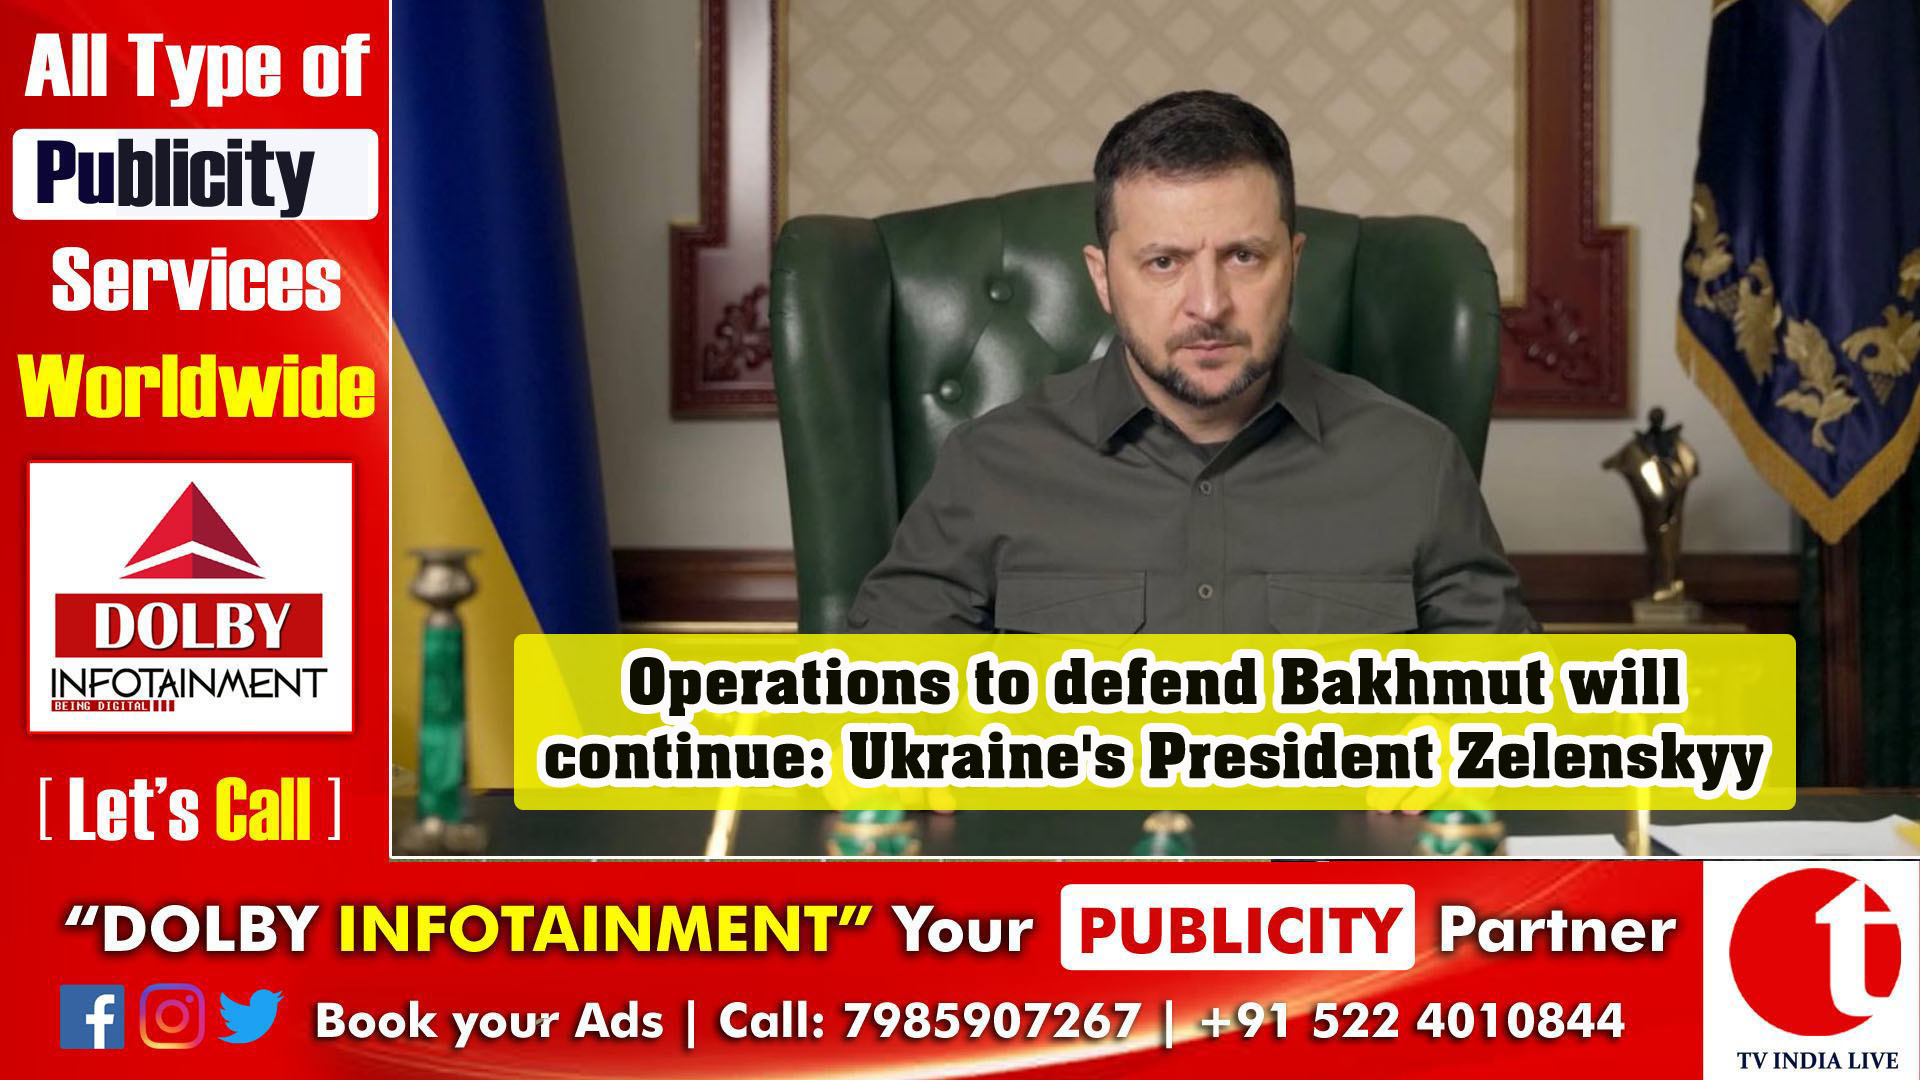 Operations to defend Bakhmut will continue: Ukraine's President Zelenskyy